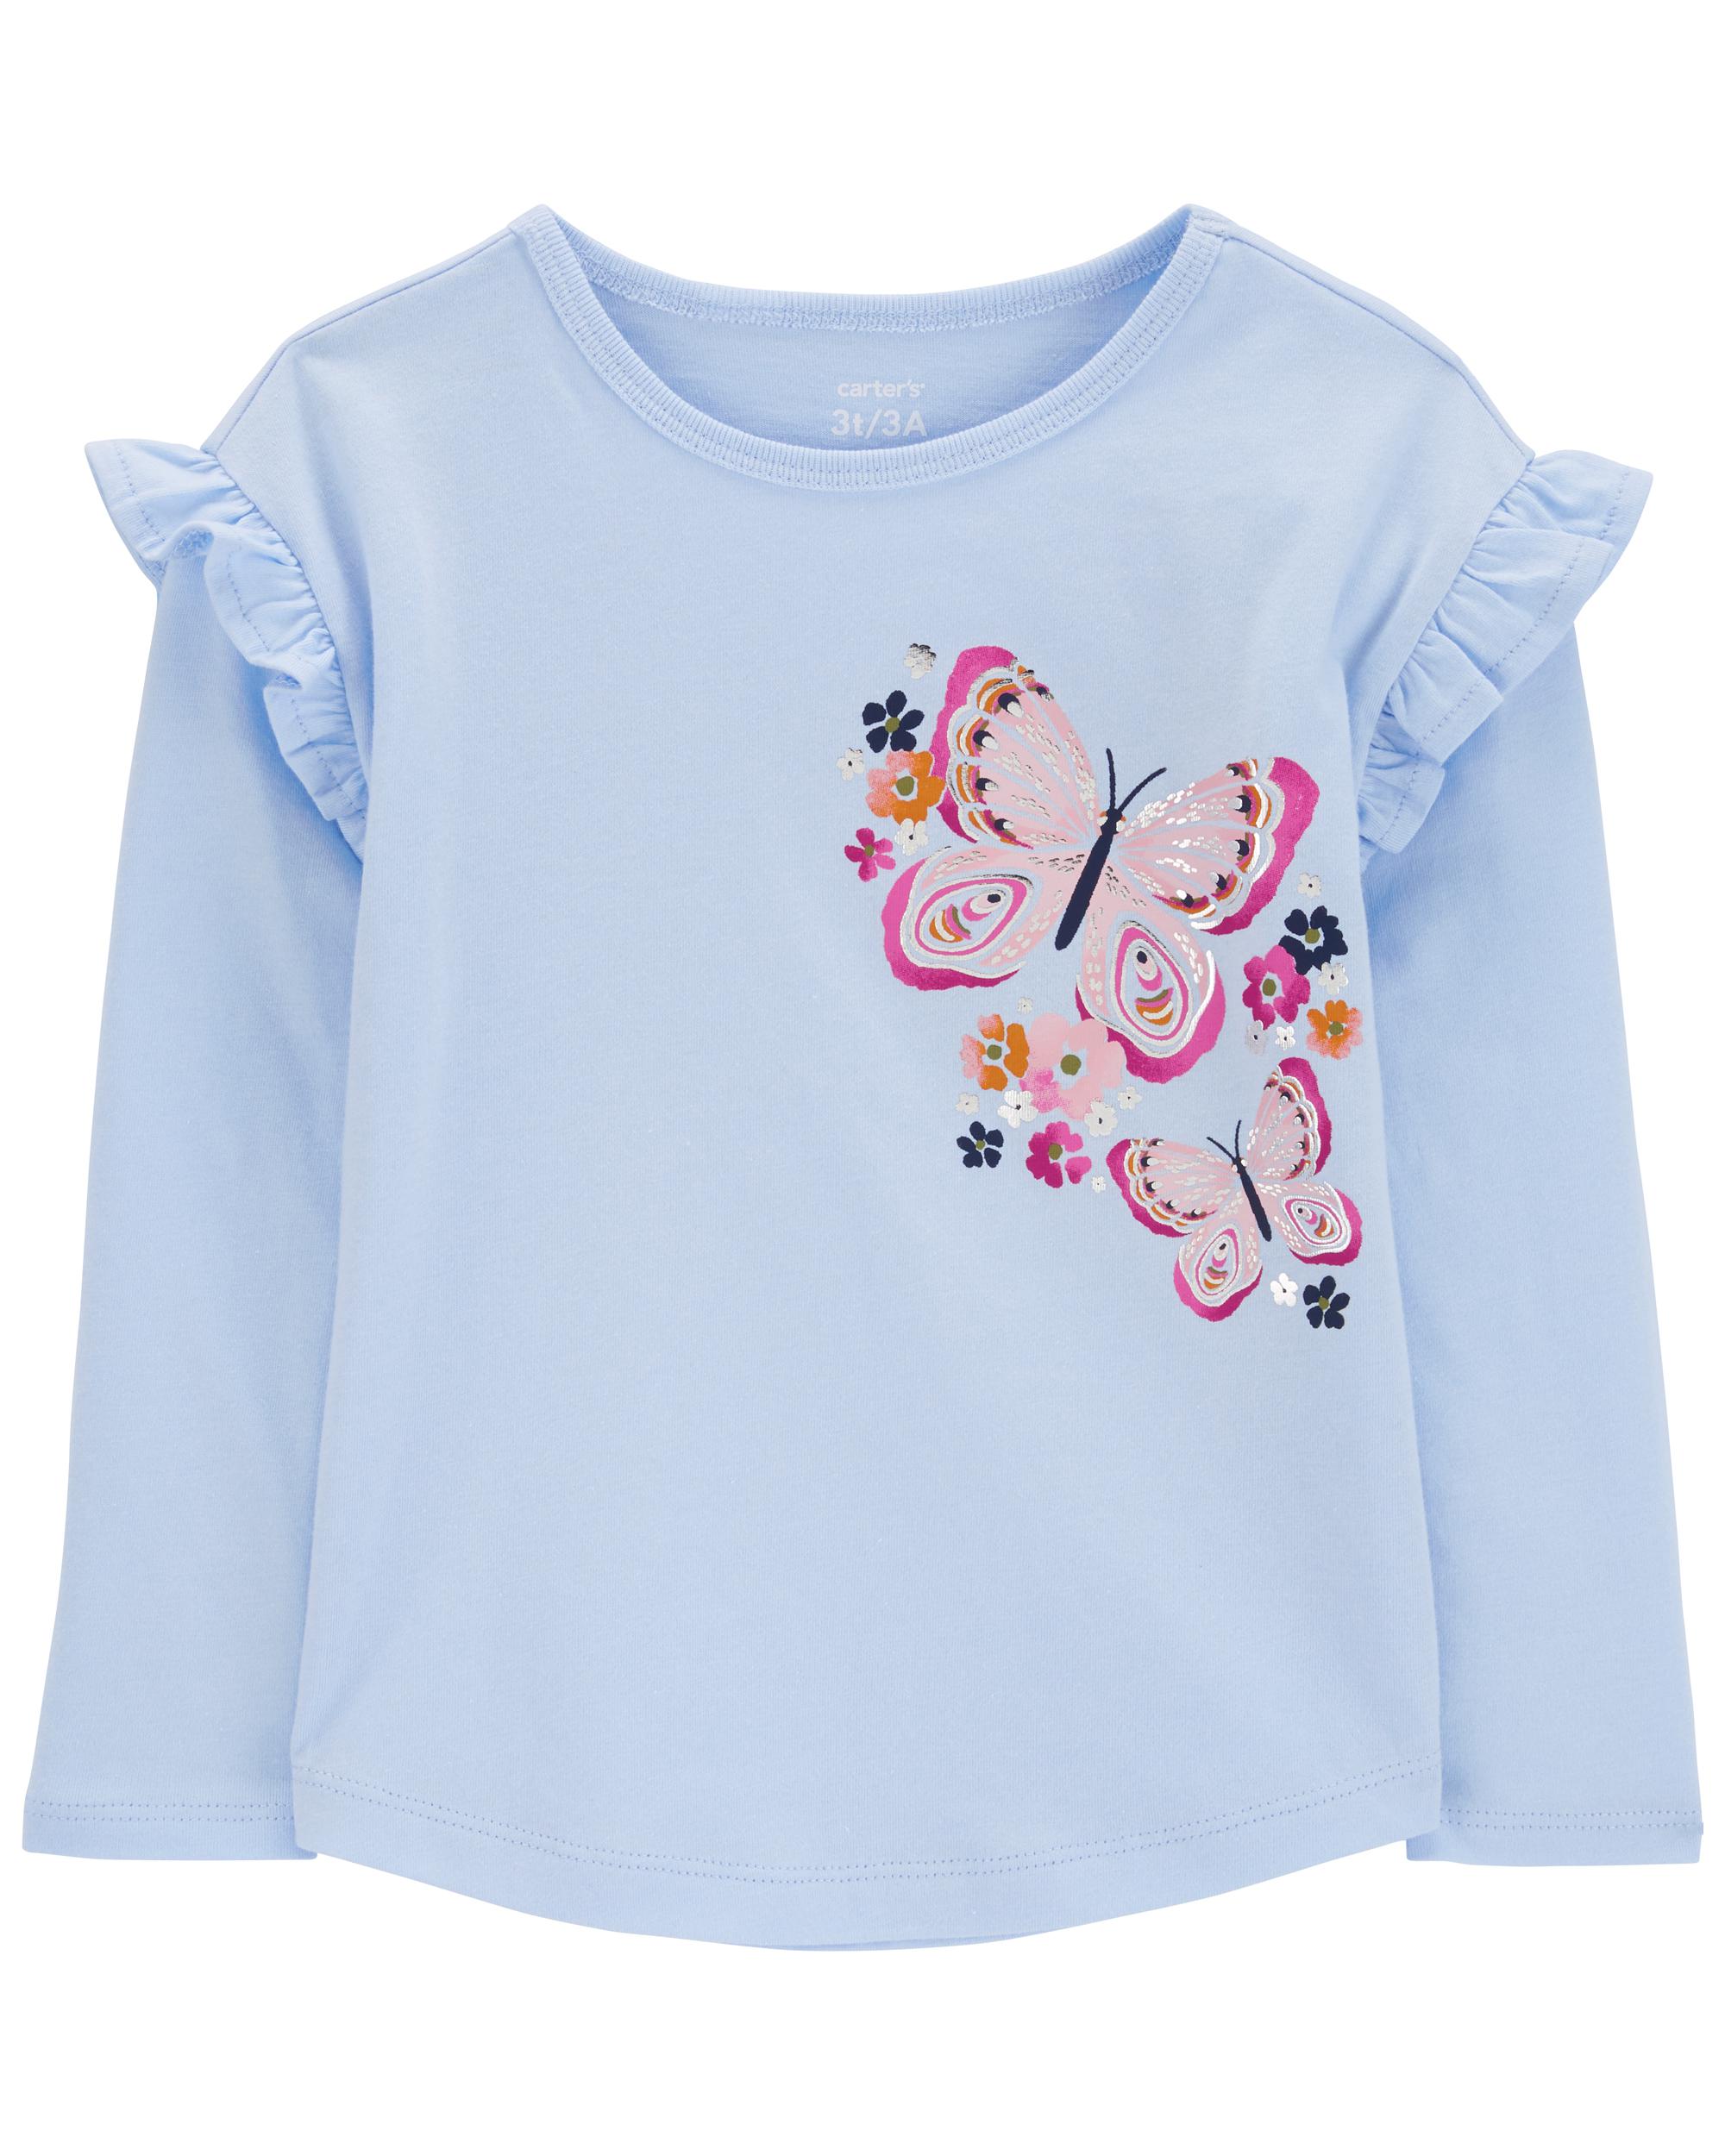 Toddler Butterfly Flutter Graphic T-Shirt